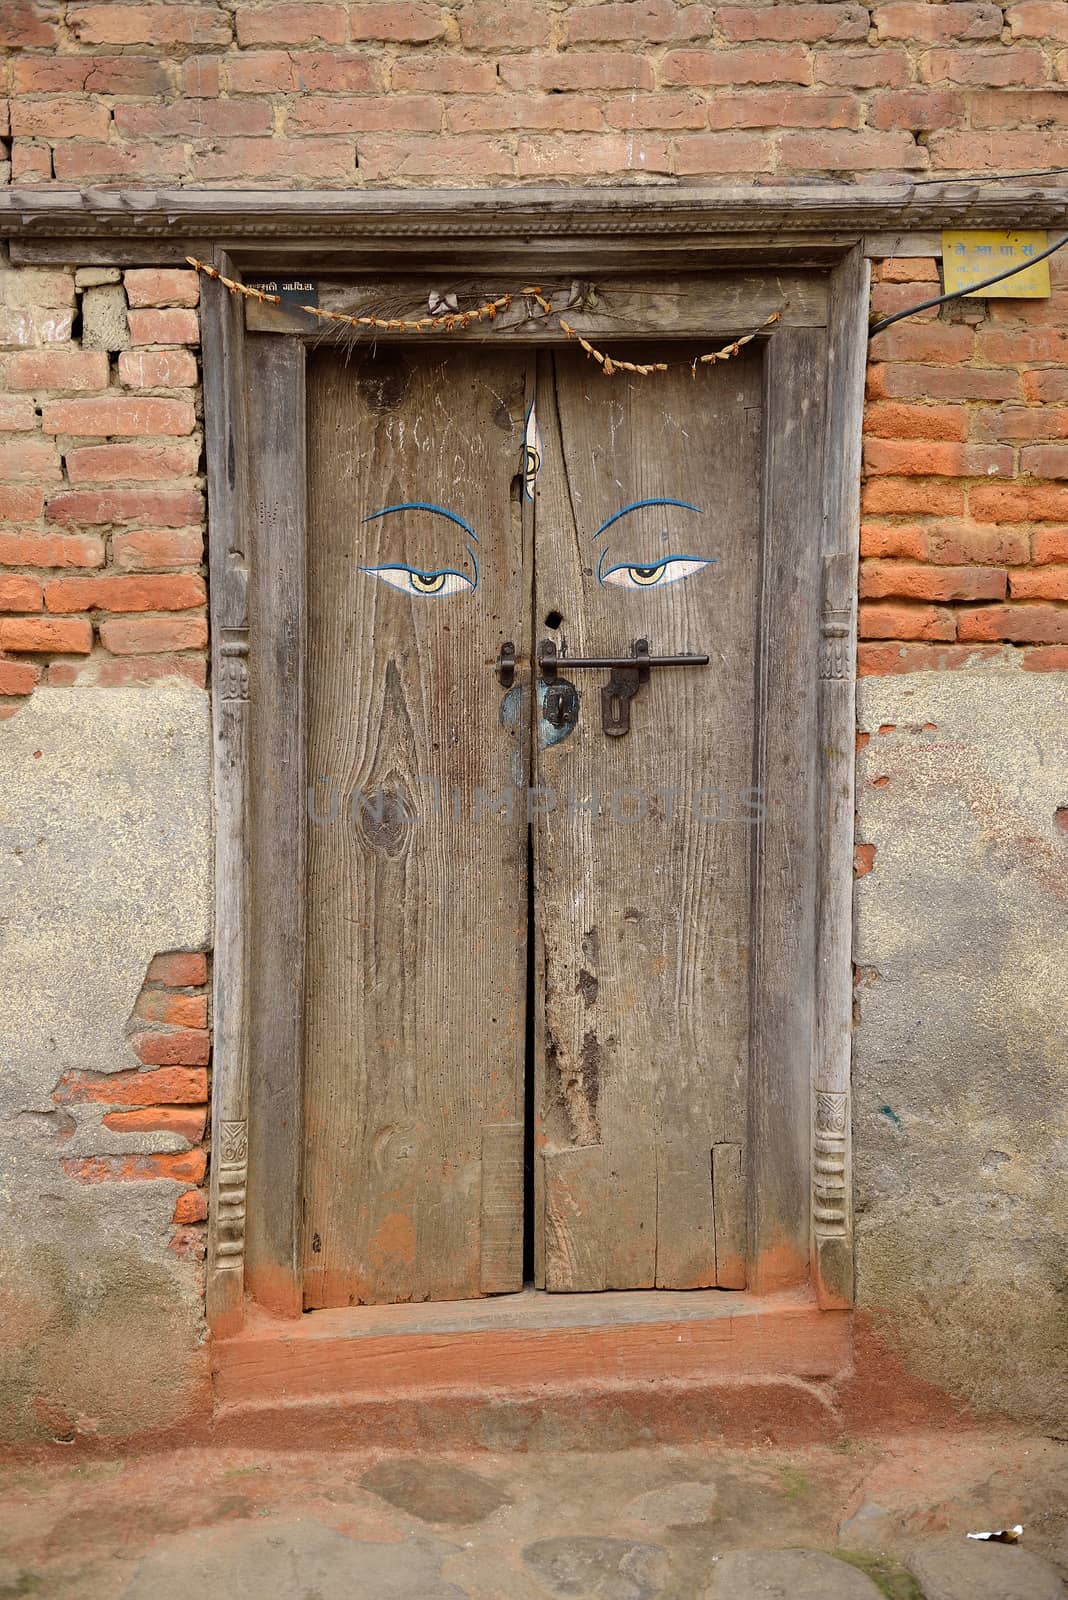 The door at Kokhana Village, Kathmandu, Nepal by think4photop